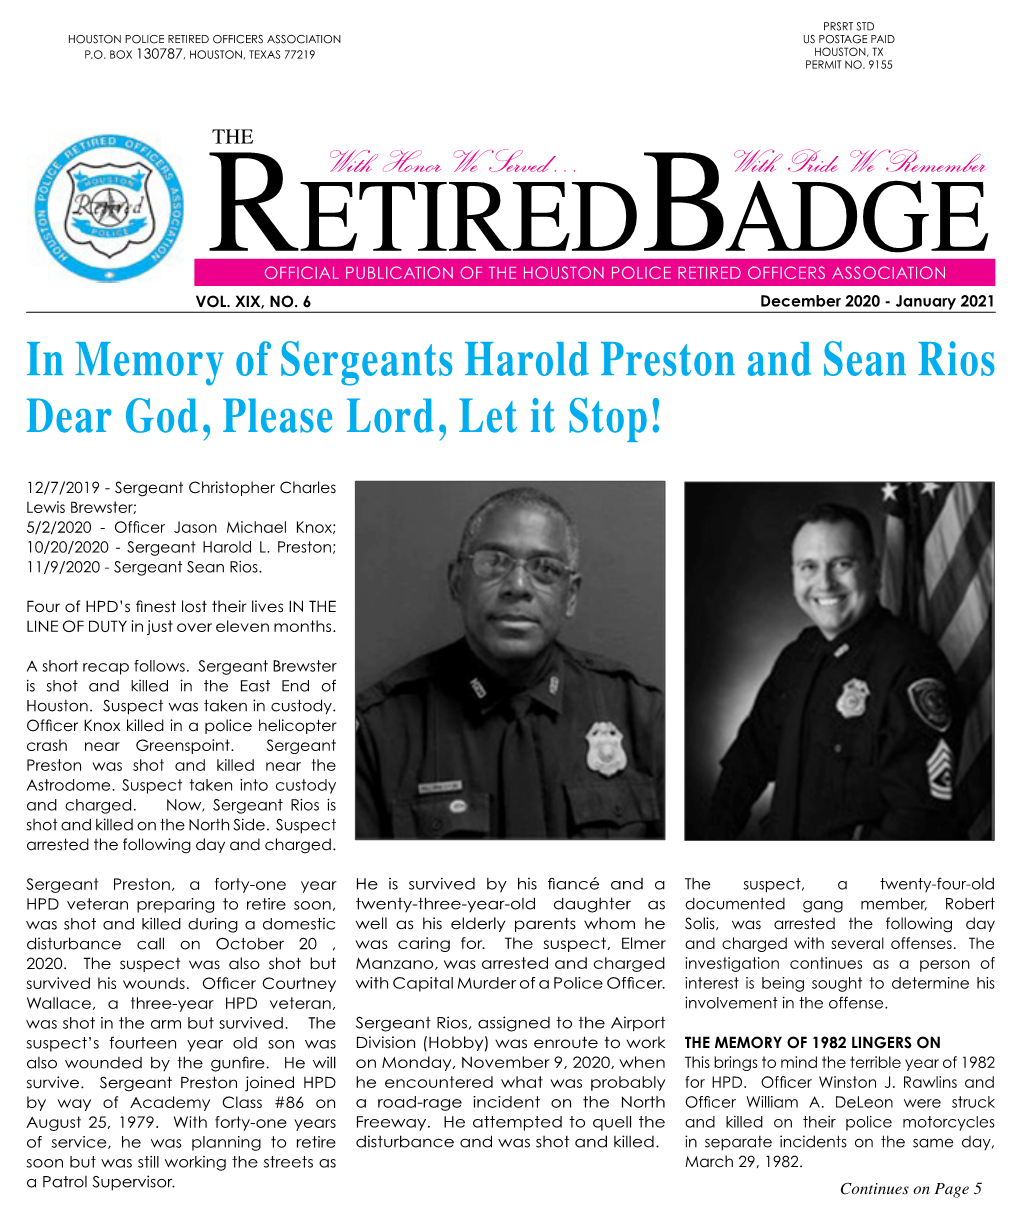 In Memory of Sergeants Harold Preston and Sean Rios Dear God, Please Lord, Let It Stop!